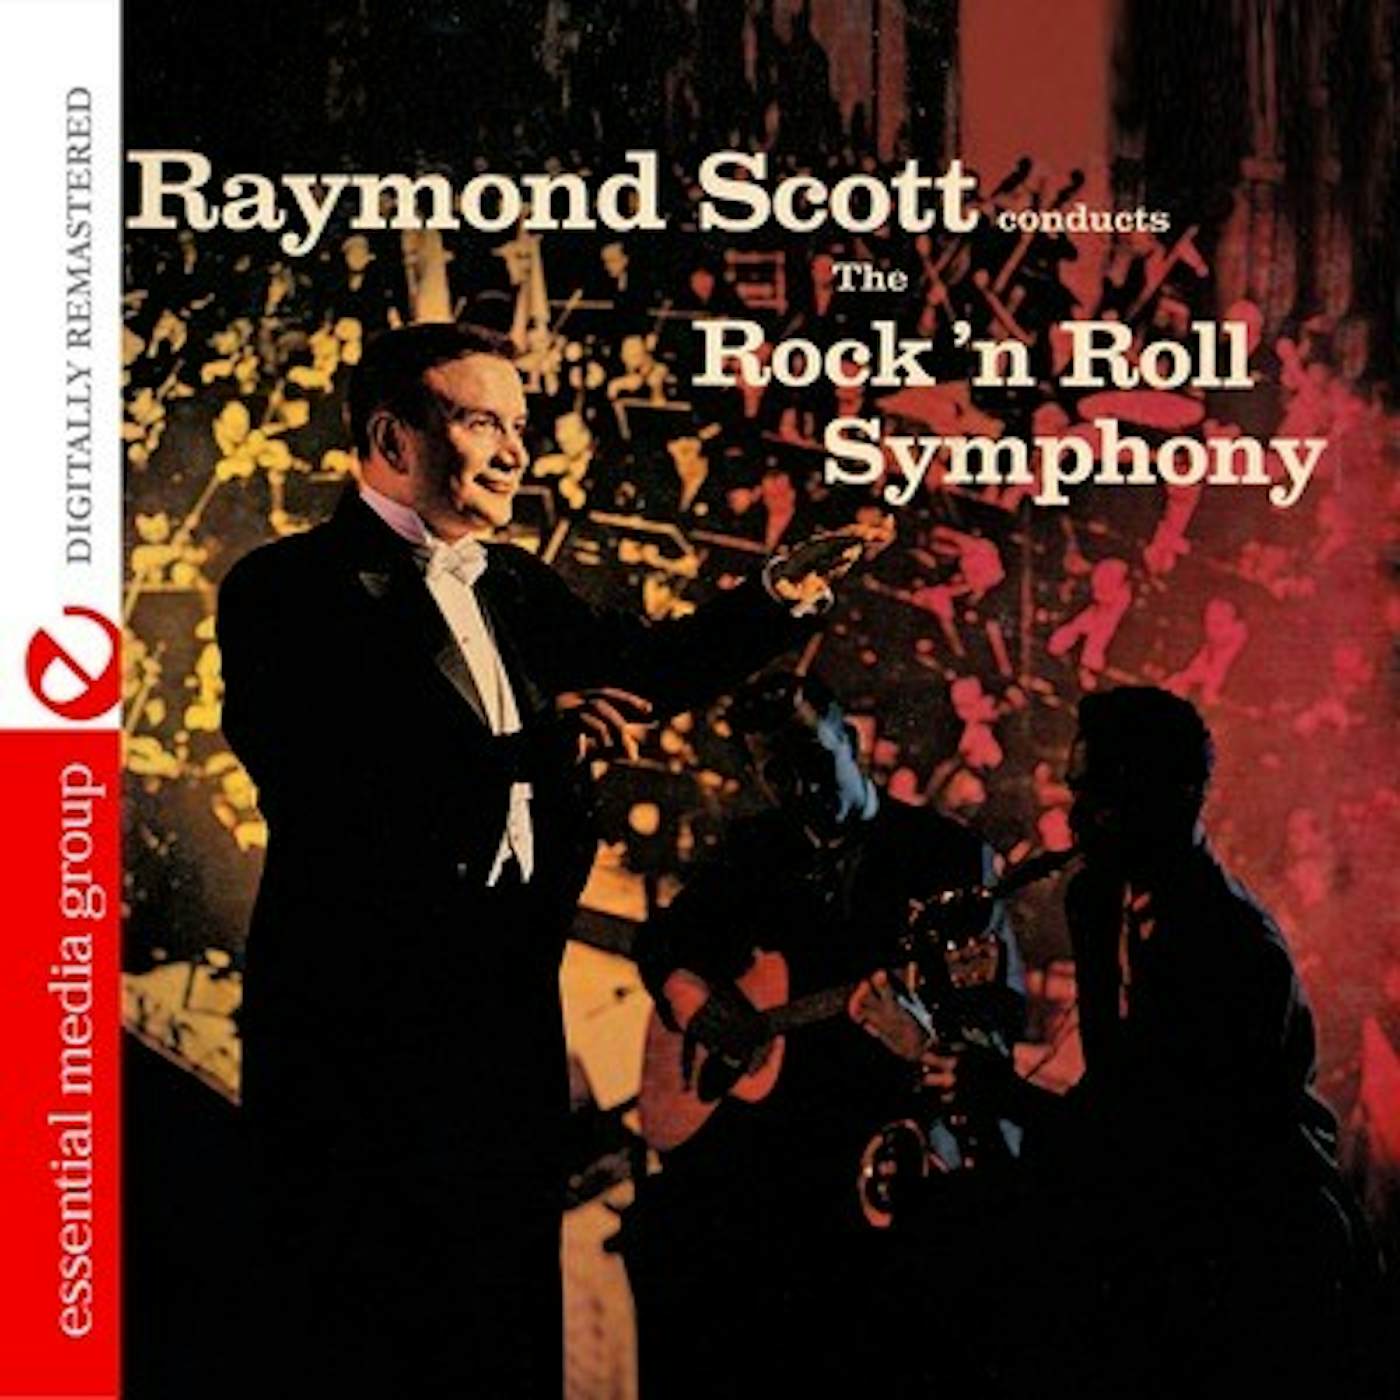 Raymond Scott ROCK 'N ROLL SYMPHONY CD